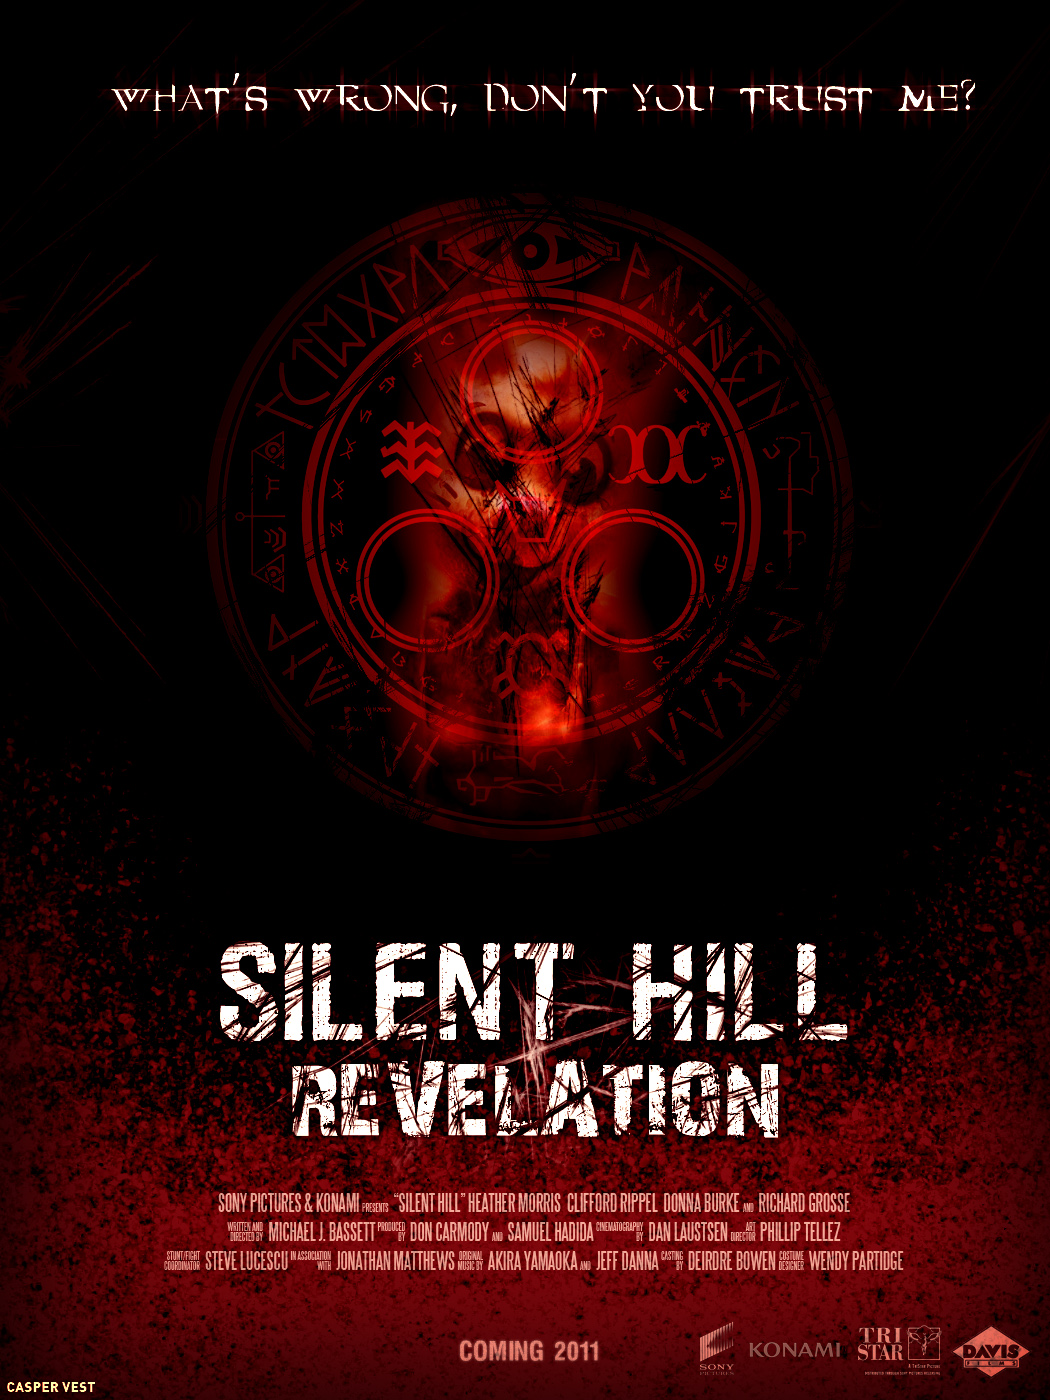 Silent Hill F Teaser Trailer 